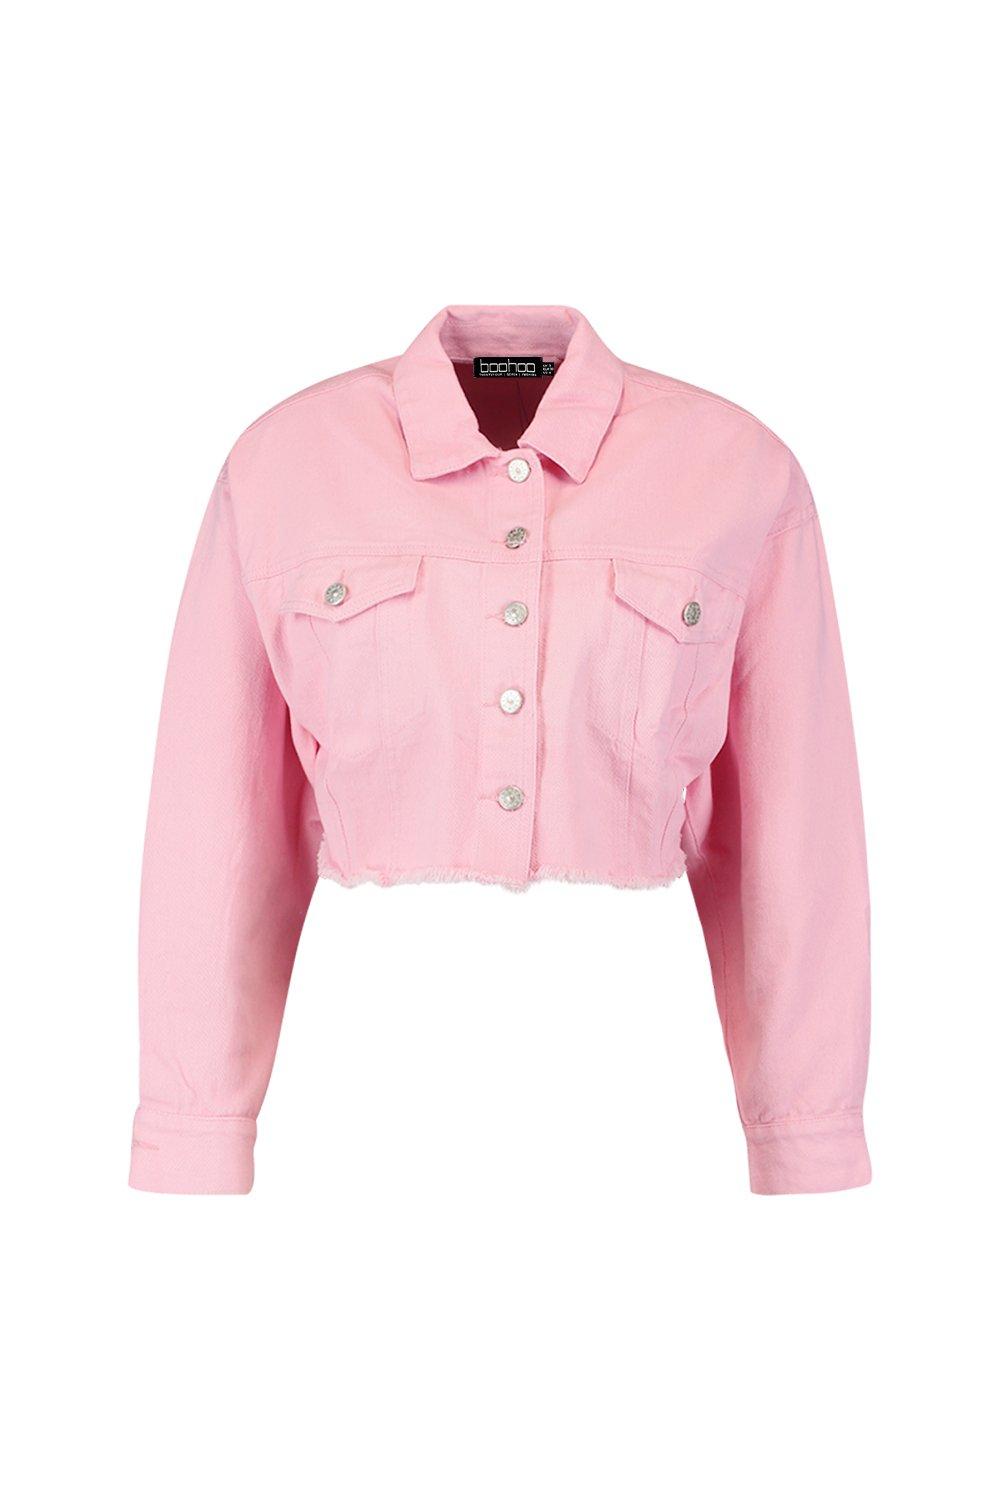 light pink jean jacket